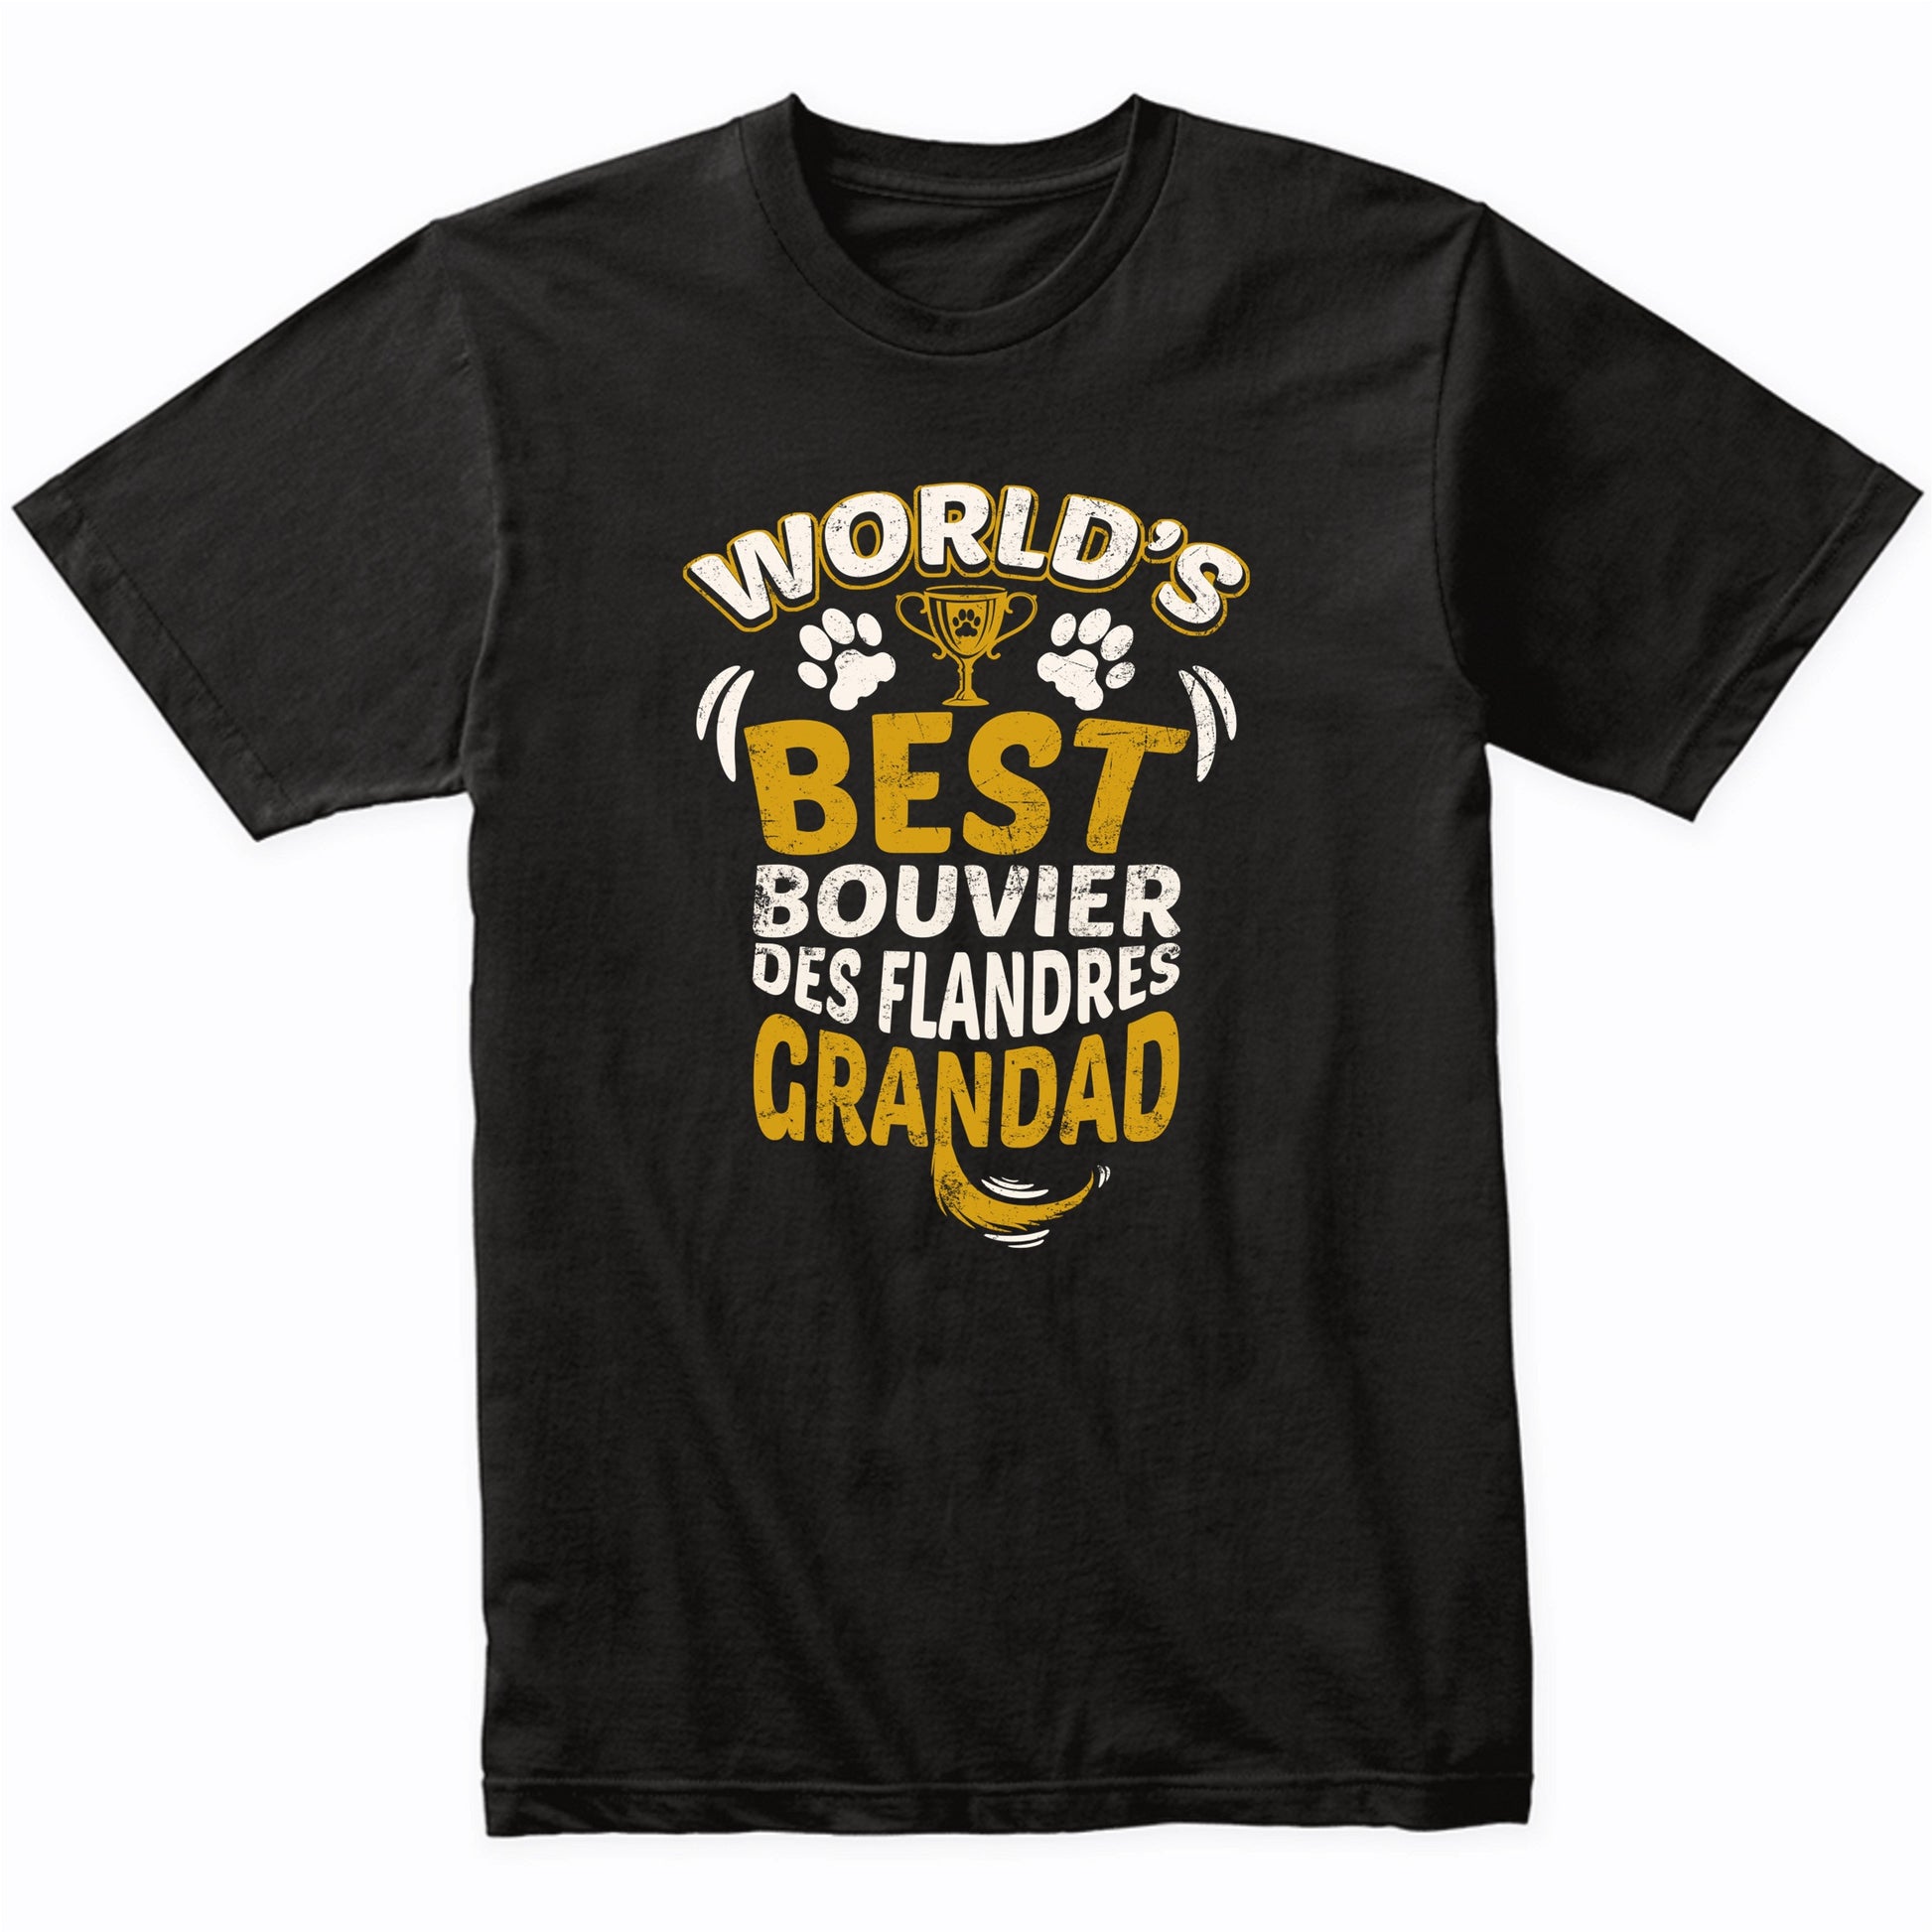 World's Best Bouvier des Flandres Grandad Graphic T-Shirt